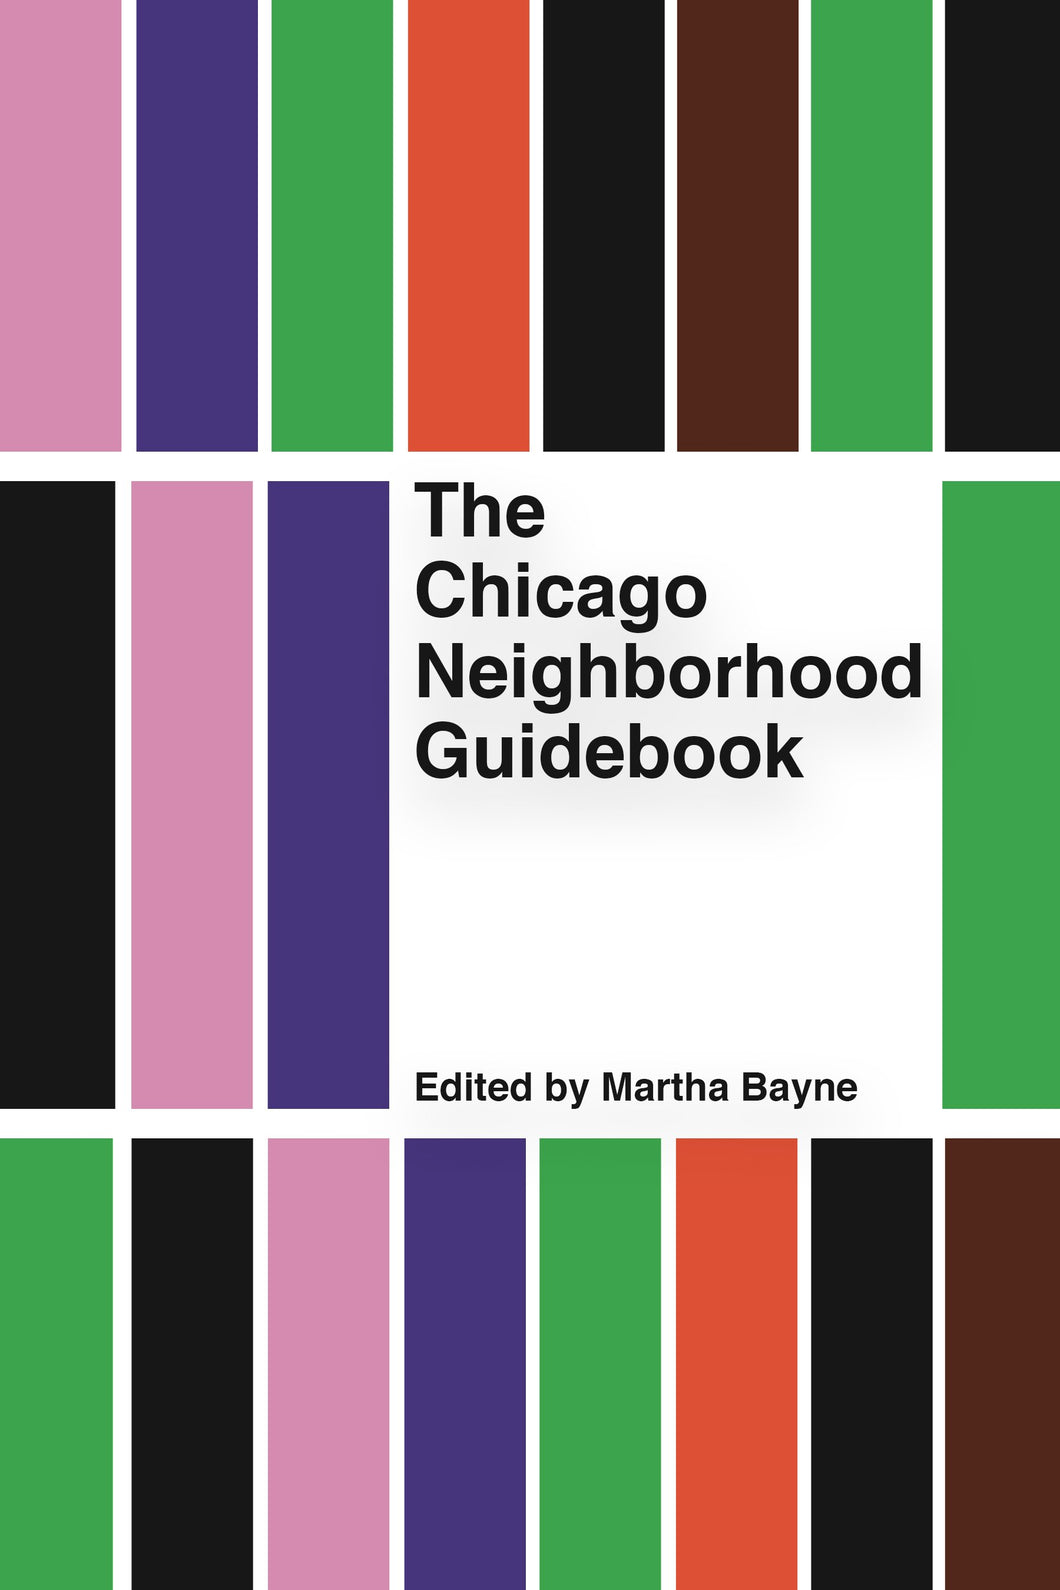 The Chicago Neighborhood Guidebook